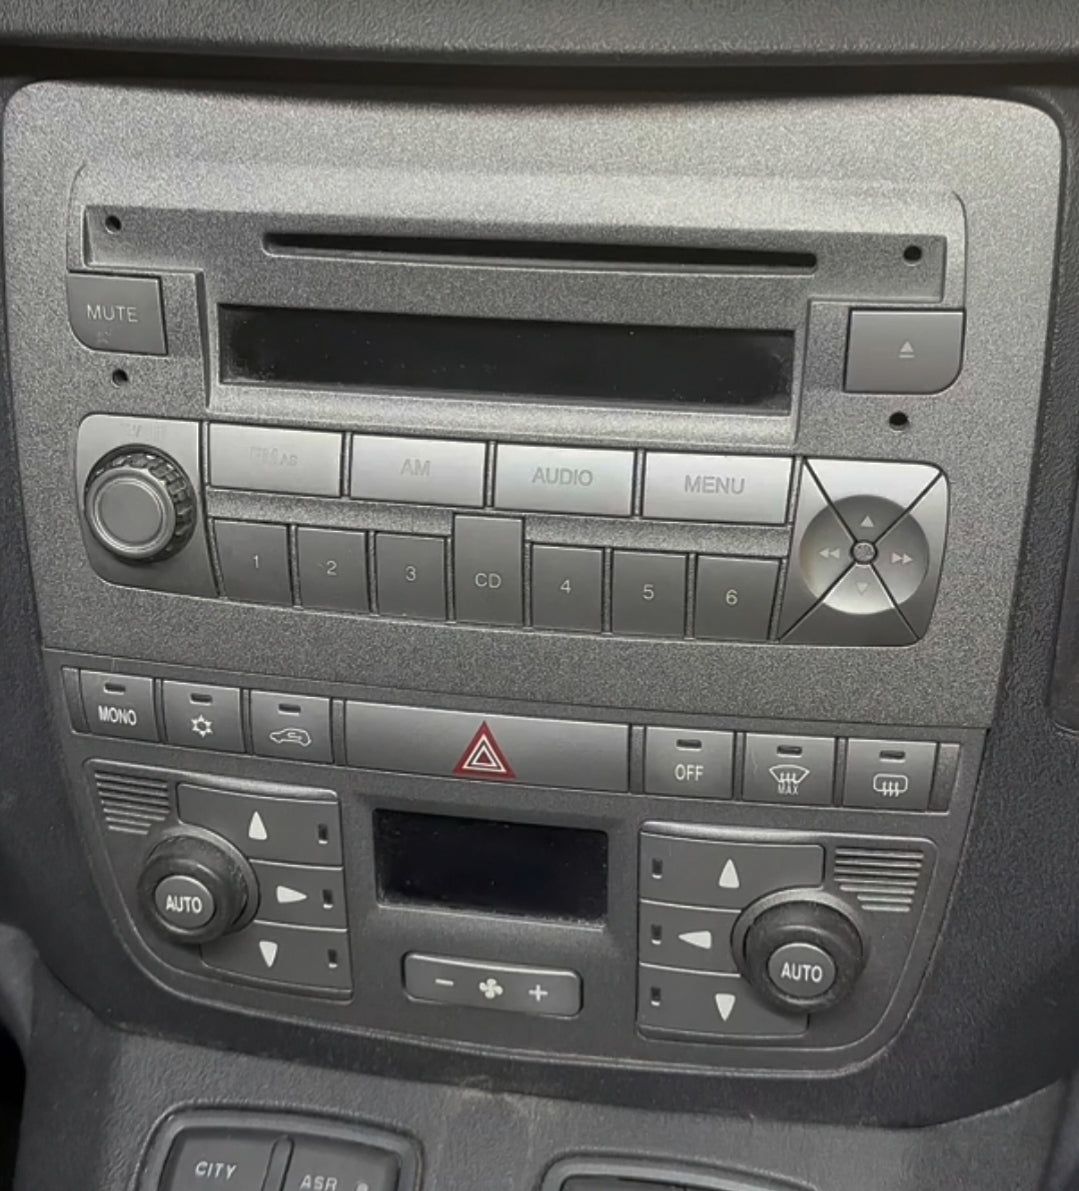 Autoradio per Fiat idea/Lancia Musa [2003-2008] - 2Din 7"Pollici, Bluetooth, Radio, Touch, USB, SD, Mirror Link Android & IOS